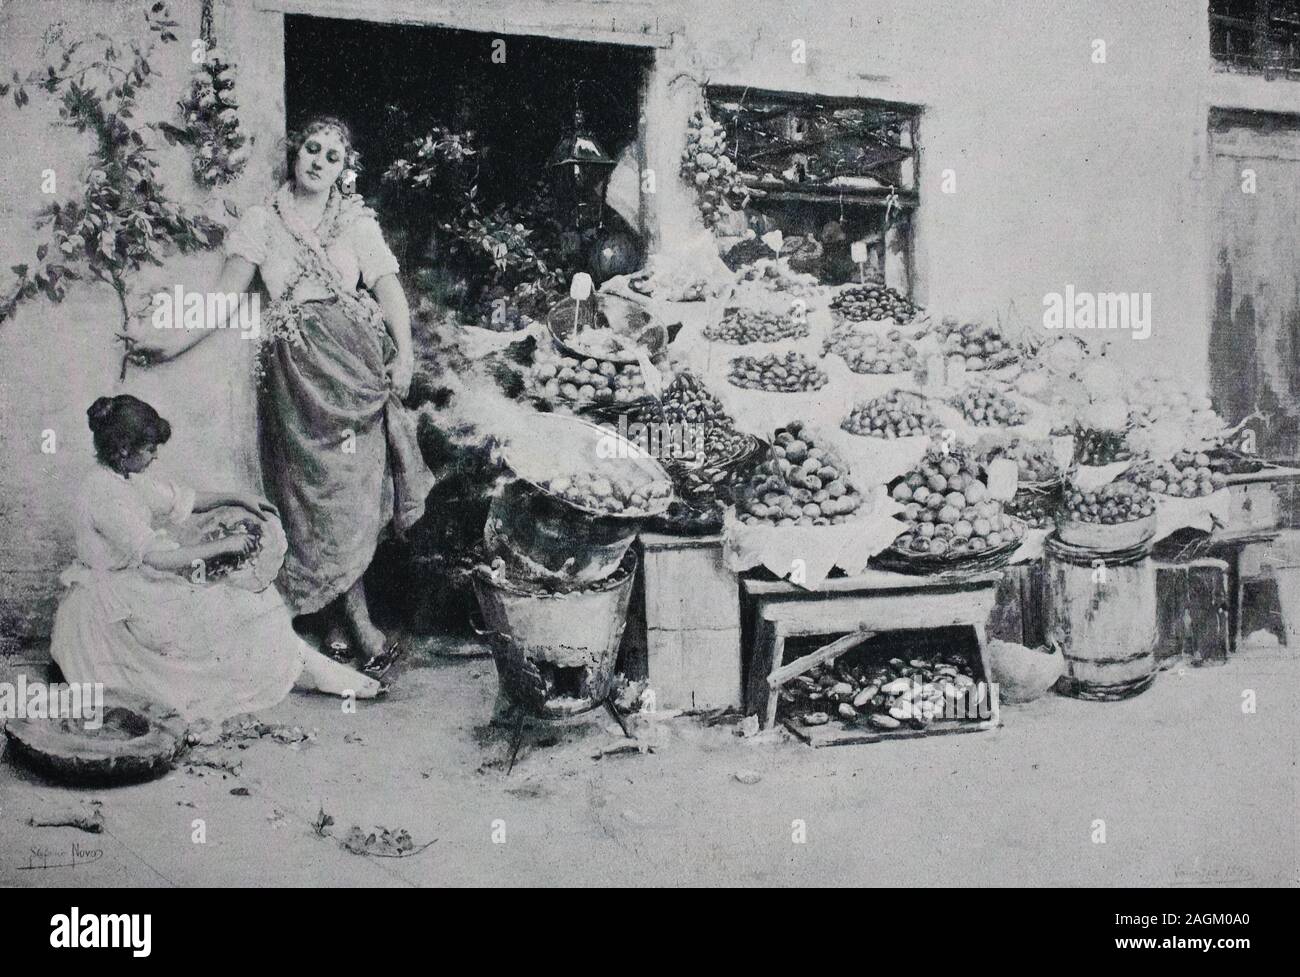 Fruit seller in Venice, Italy, original print from the year 1899, Fruchtverkäufer in Venedig, Italien, Reproduktion einer Originalvorlage aus dem 19. Jahrhundert, digital verbessert Stock Photo